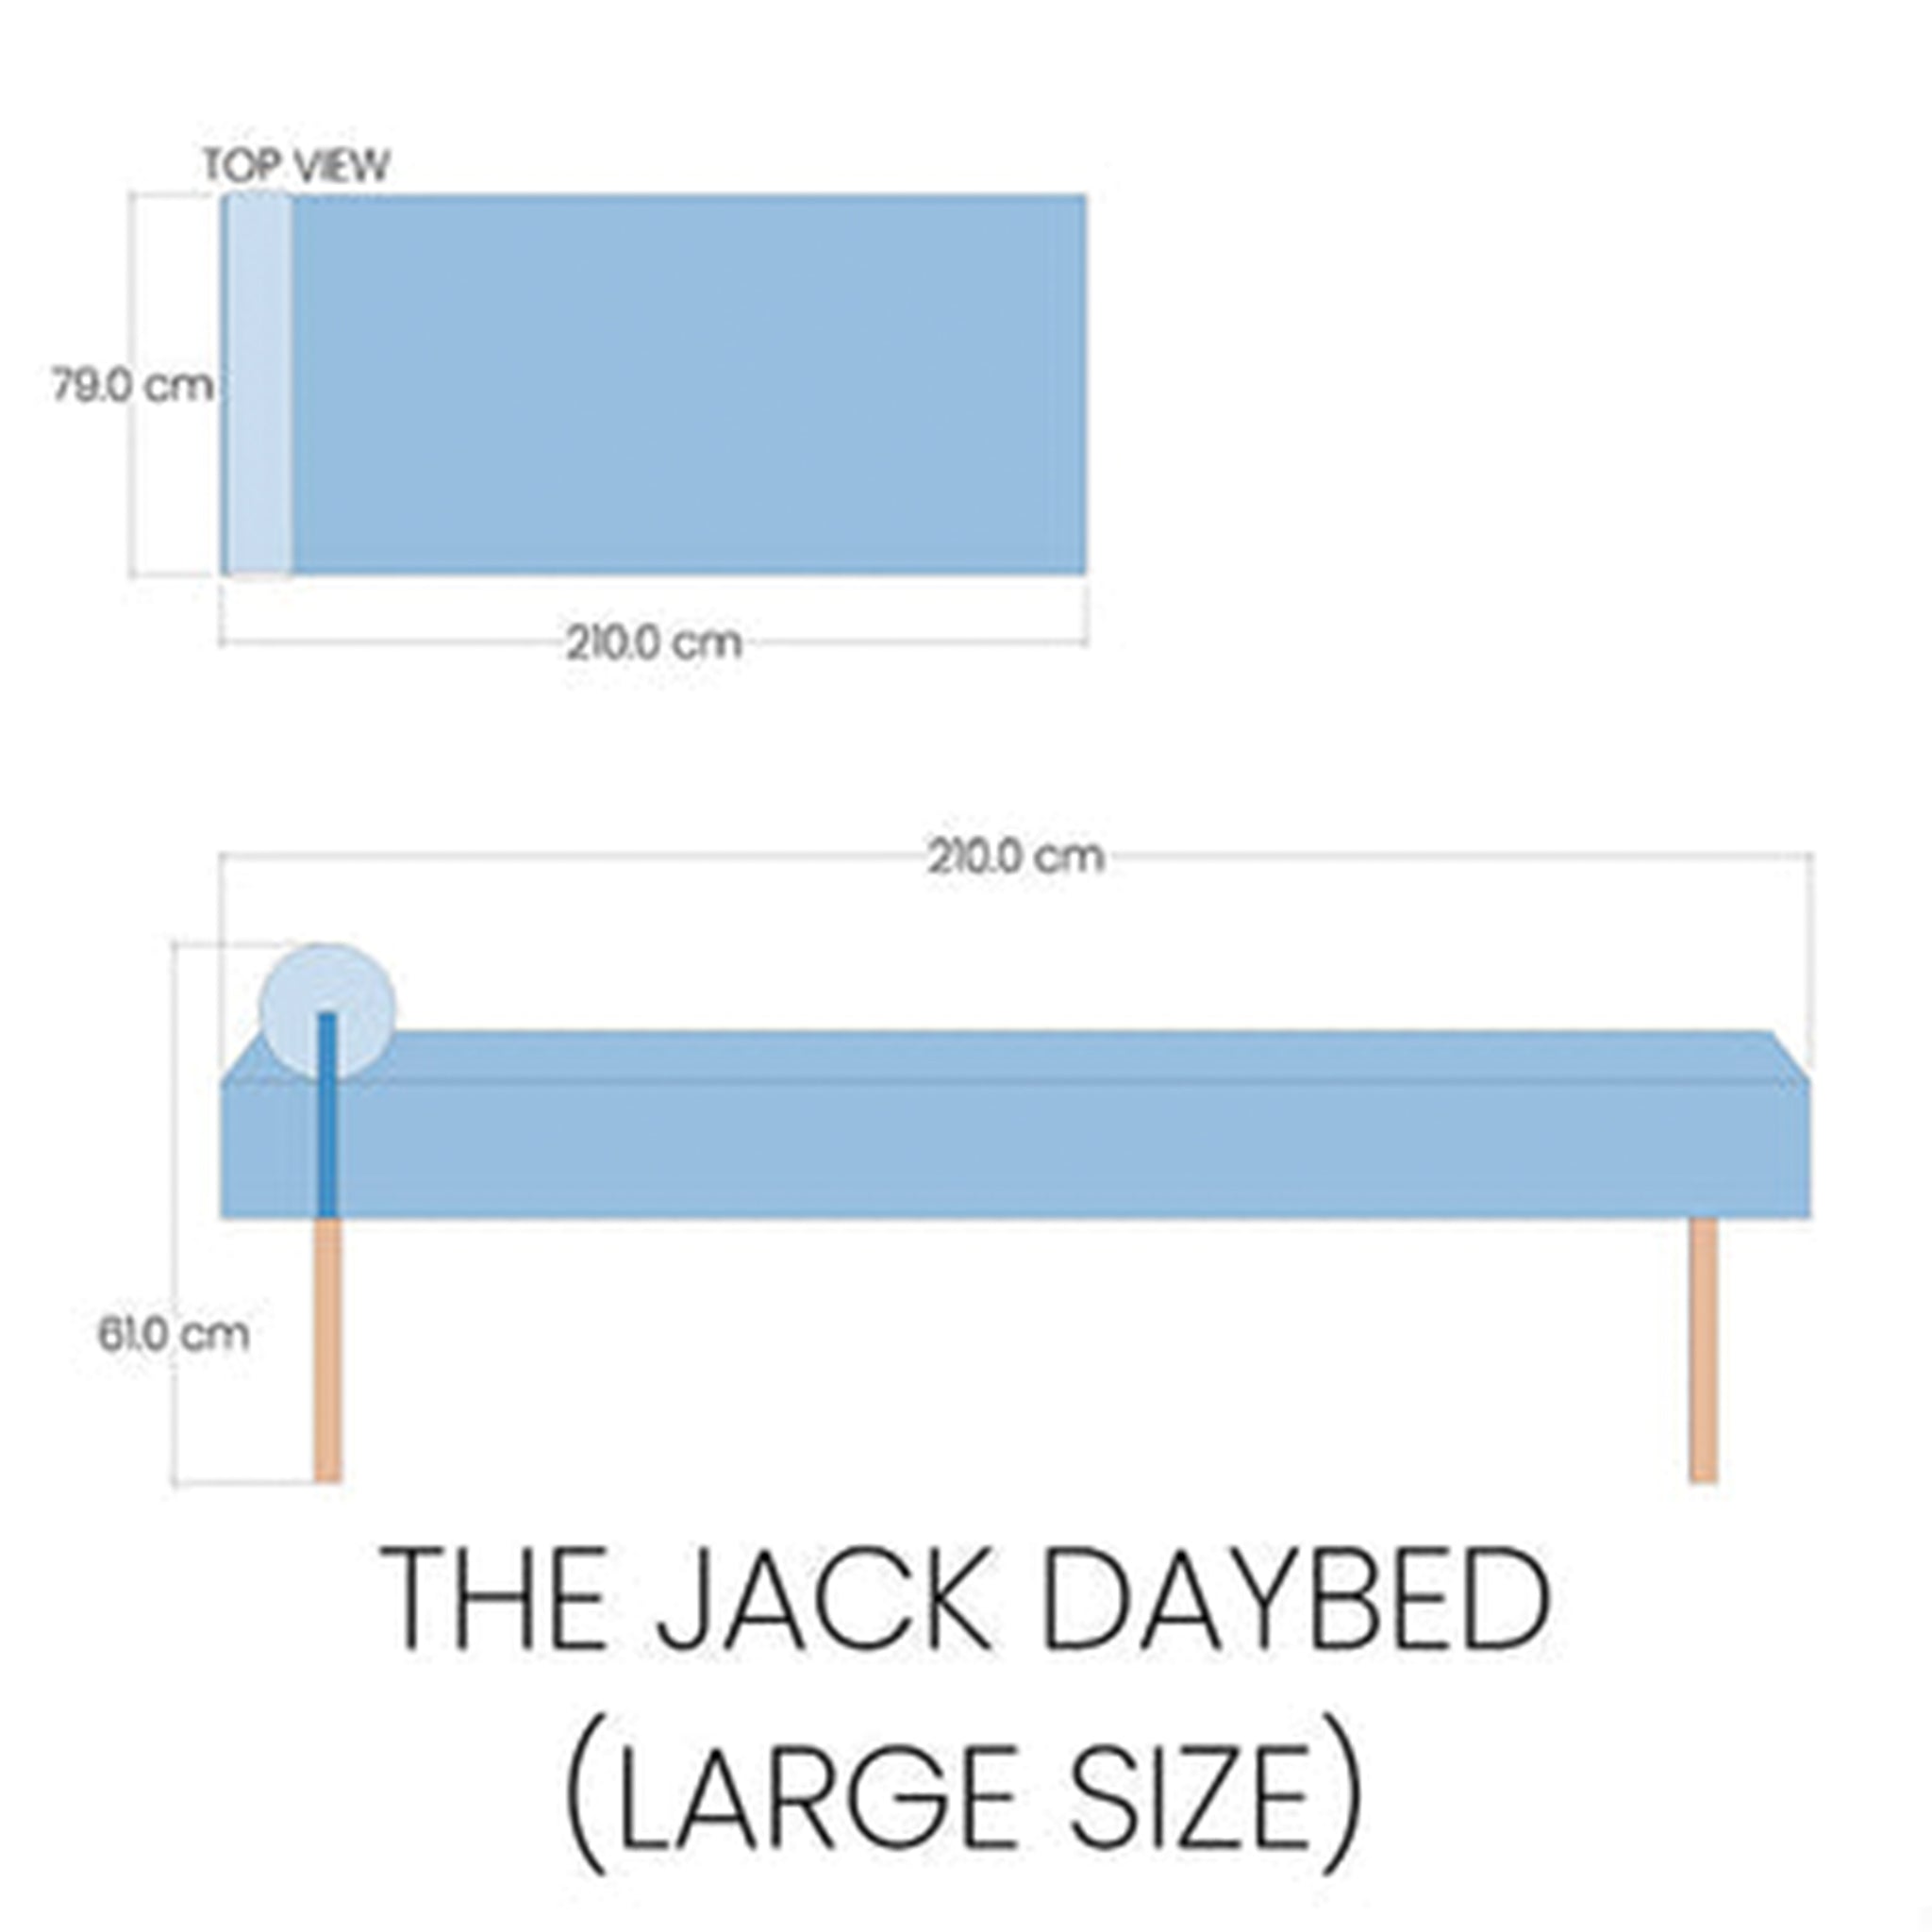 Sleek and stylish The Jack Daybed design